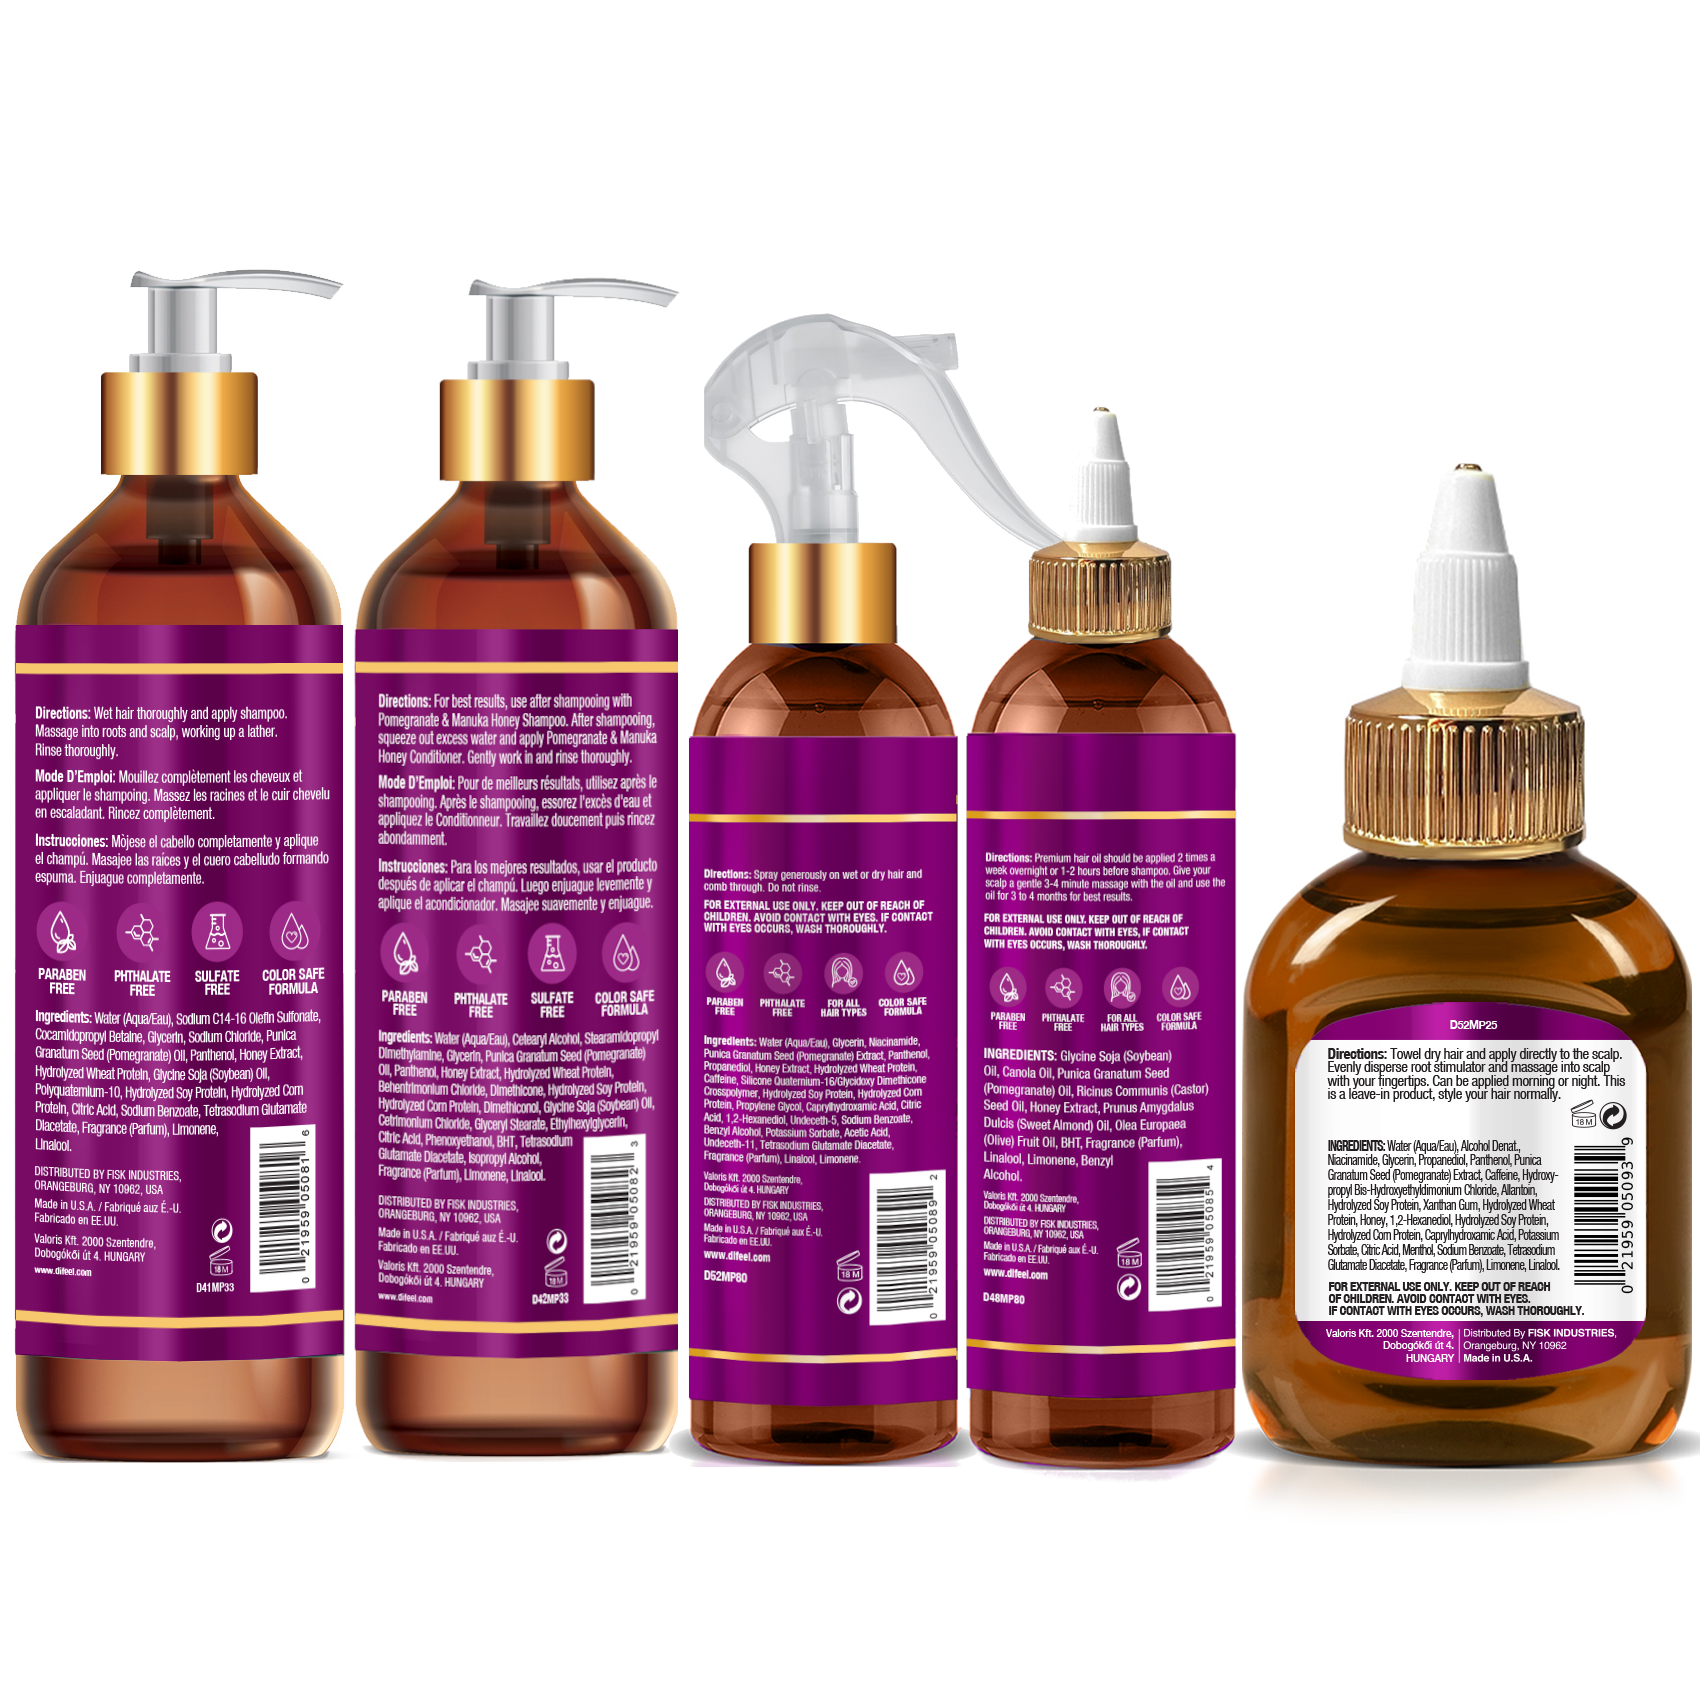 Difeel Pomegranate & Manuka Honey Shampoo & Conditioner 5-PC Set - Includes 33.8oz Shampoo, 33.8oz Conditioner, 8oz Leave in Spray, 8oz Hair Oil & 2.5oz Root Stimulator